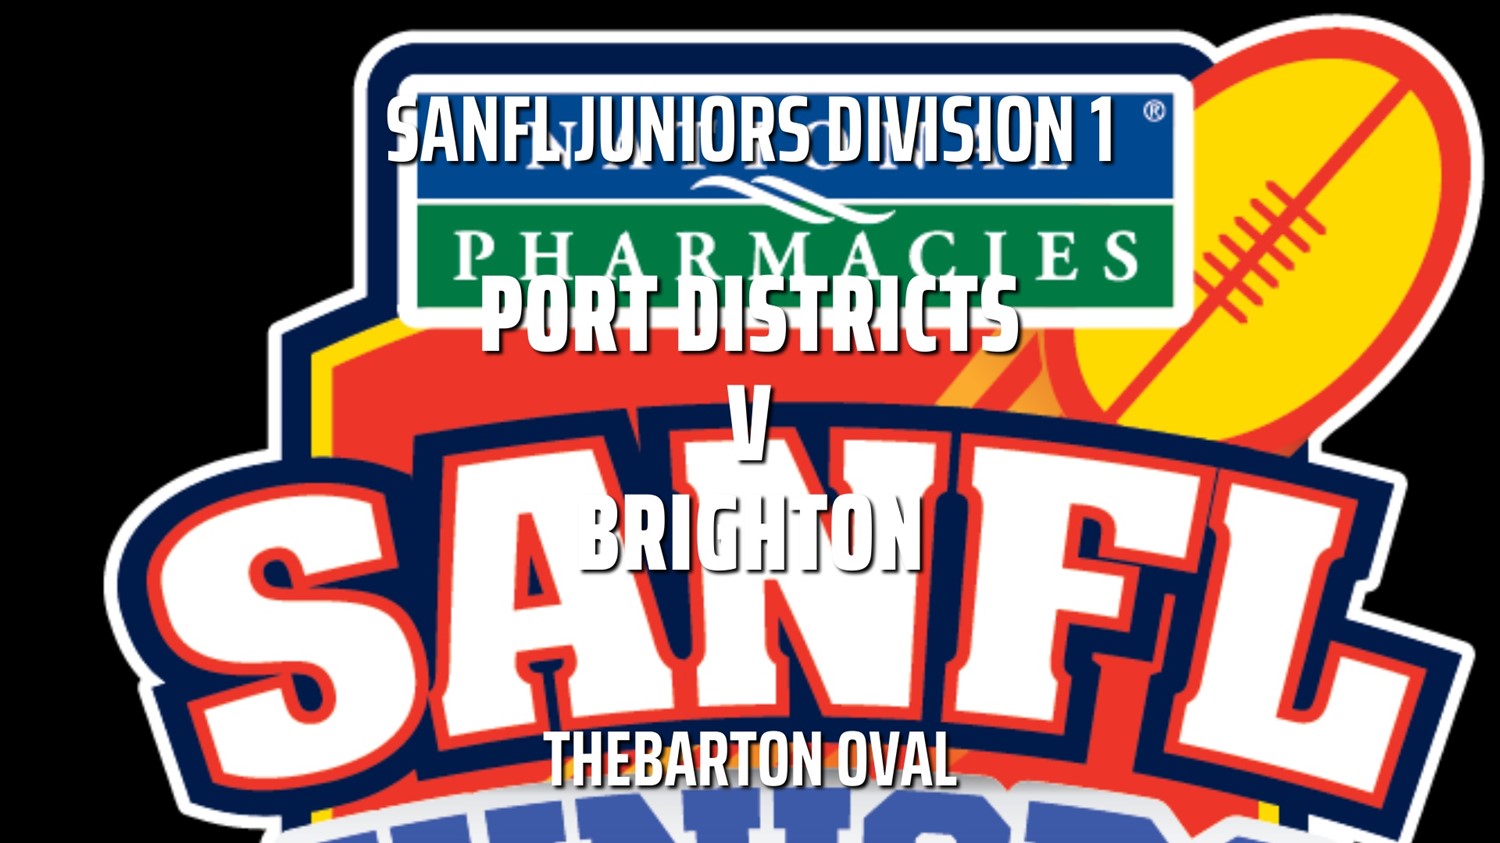 210919-SANFL Juniors Division 1 - Under 15 Boys - PORT DISTRICTS v BRIGHTON Slate Image